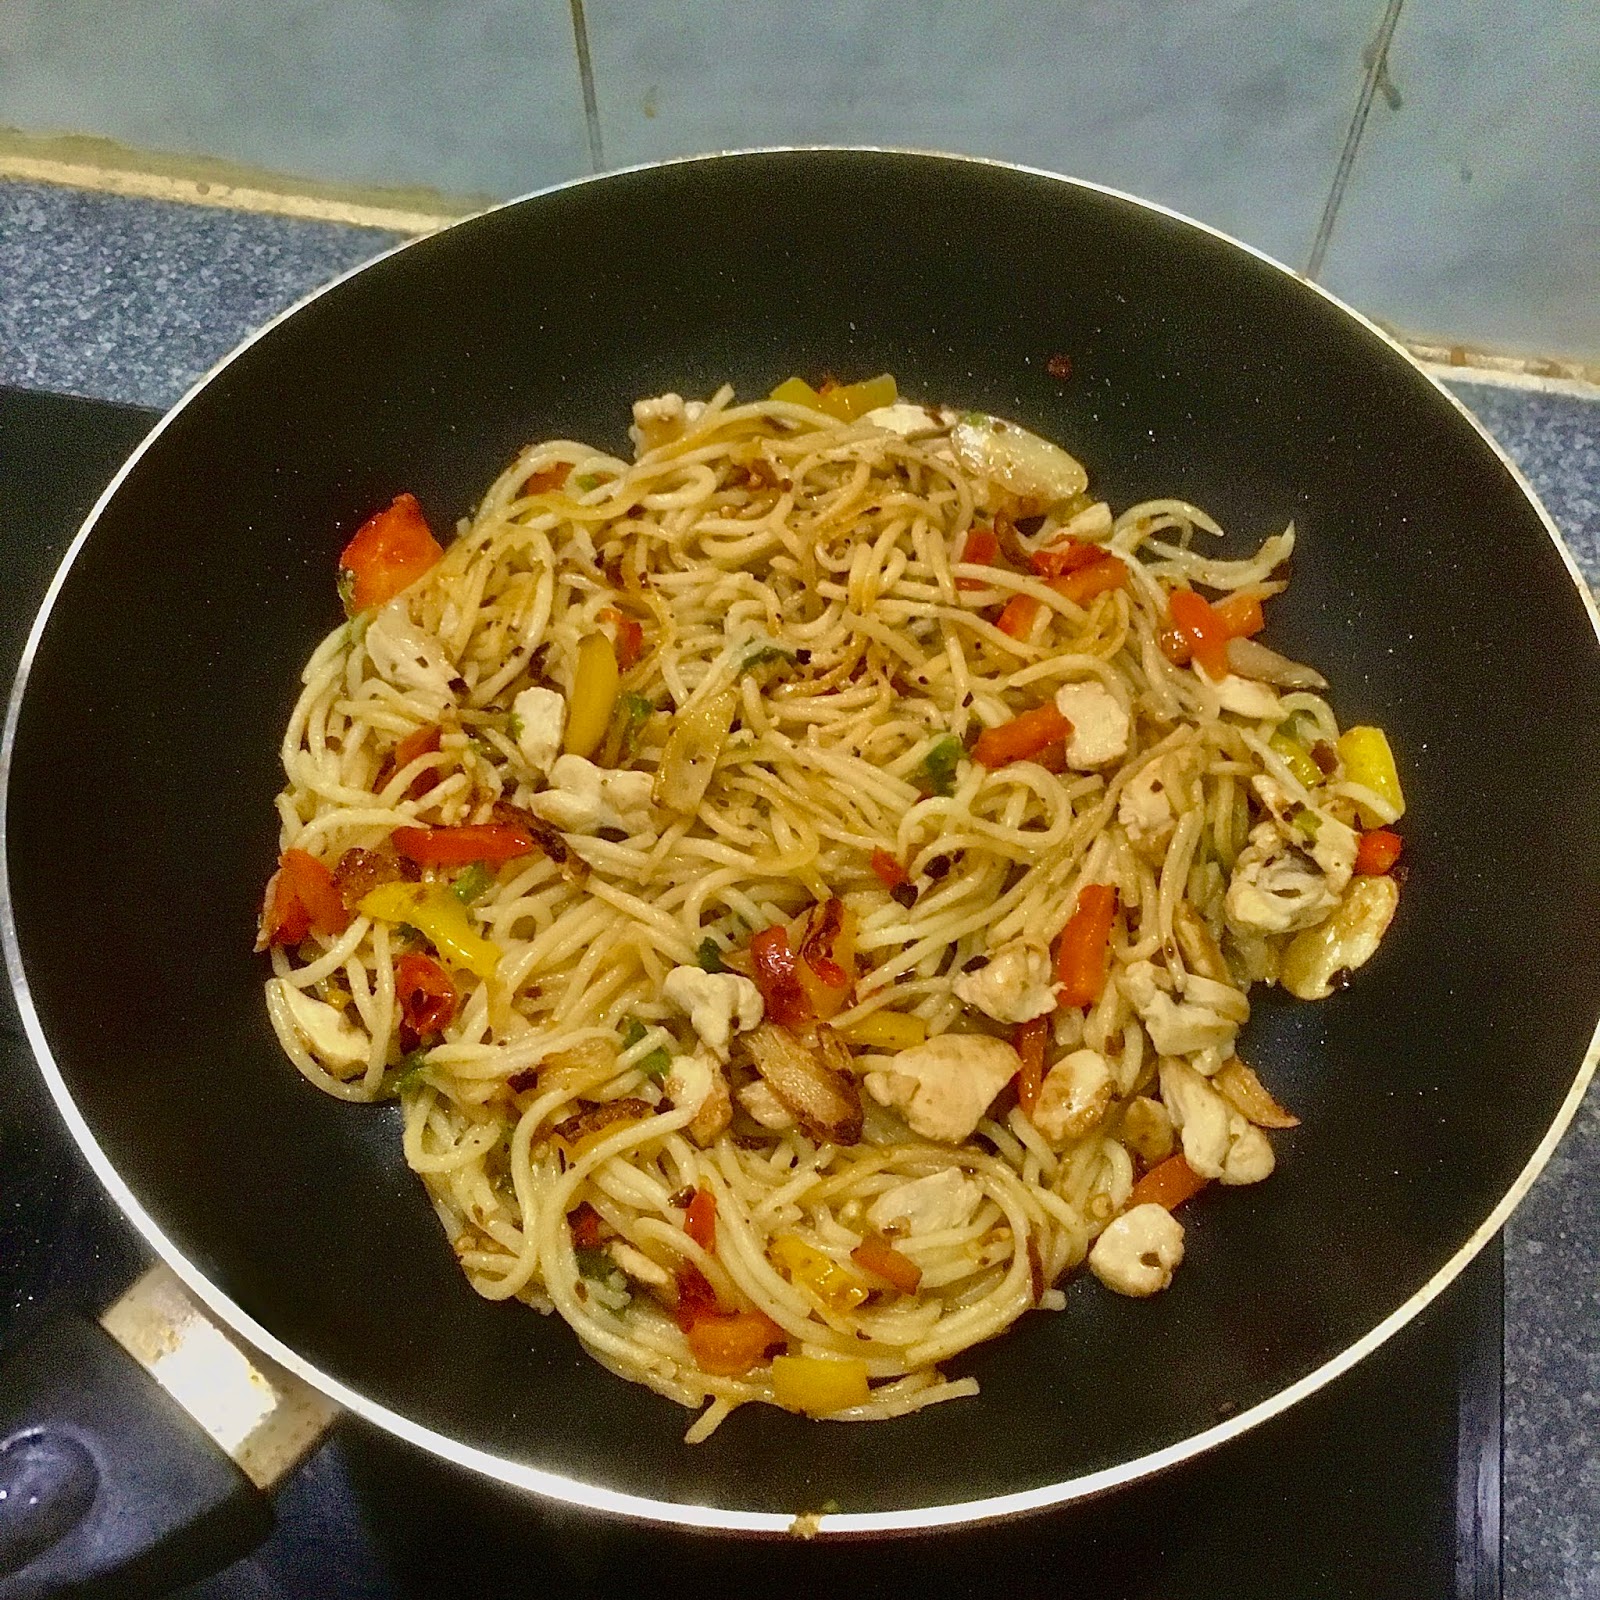 Resepi Spaghetti Aglio Olio Yang Sedap - Surasmi K